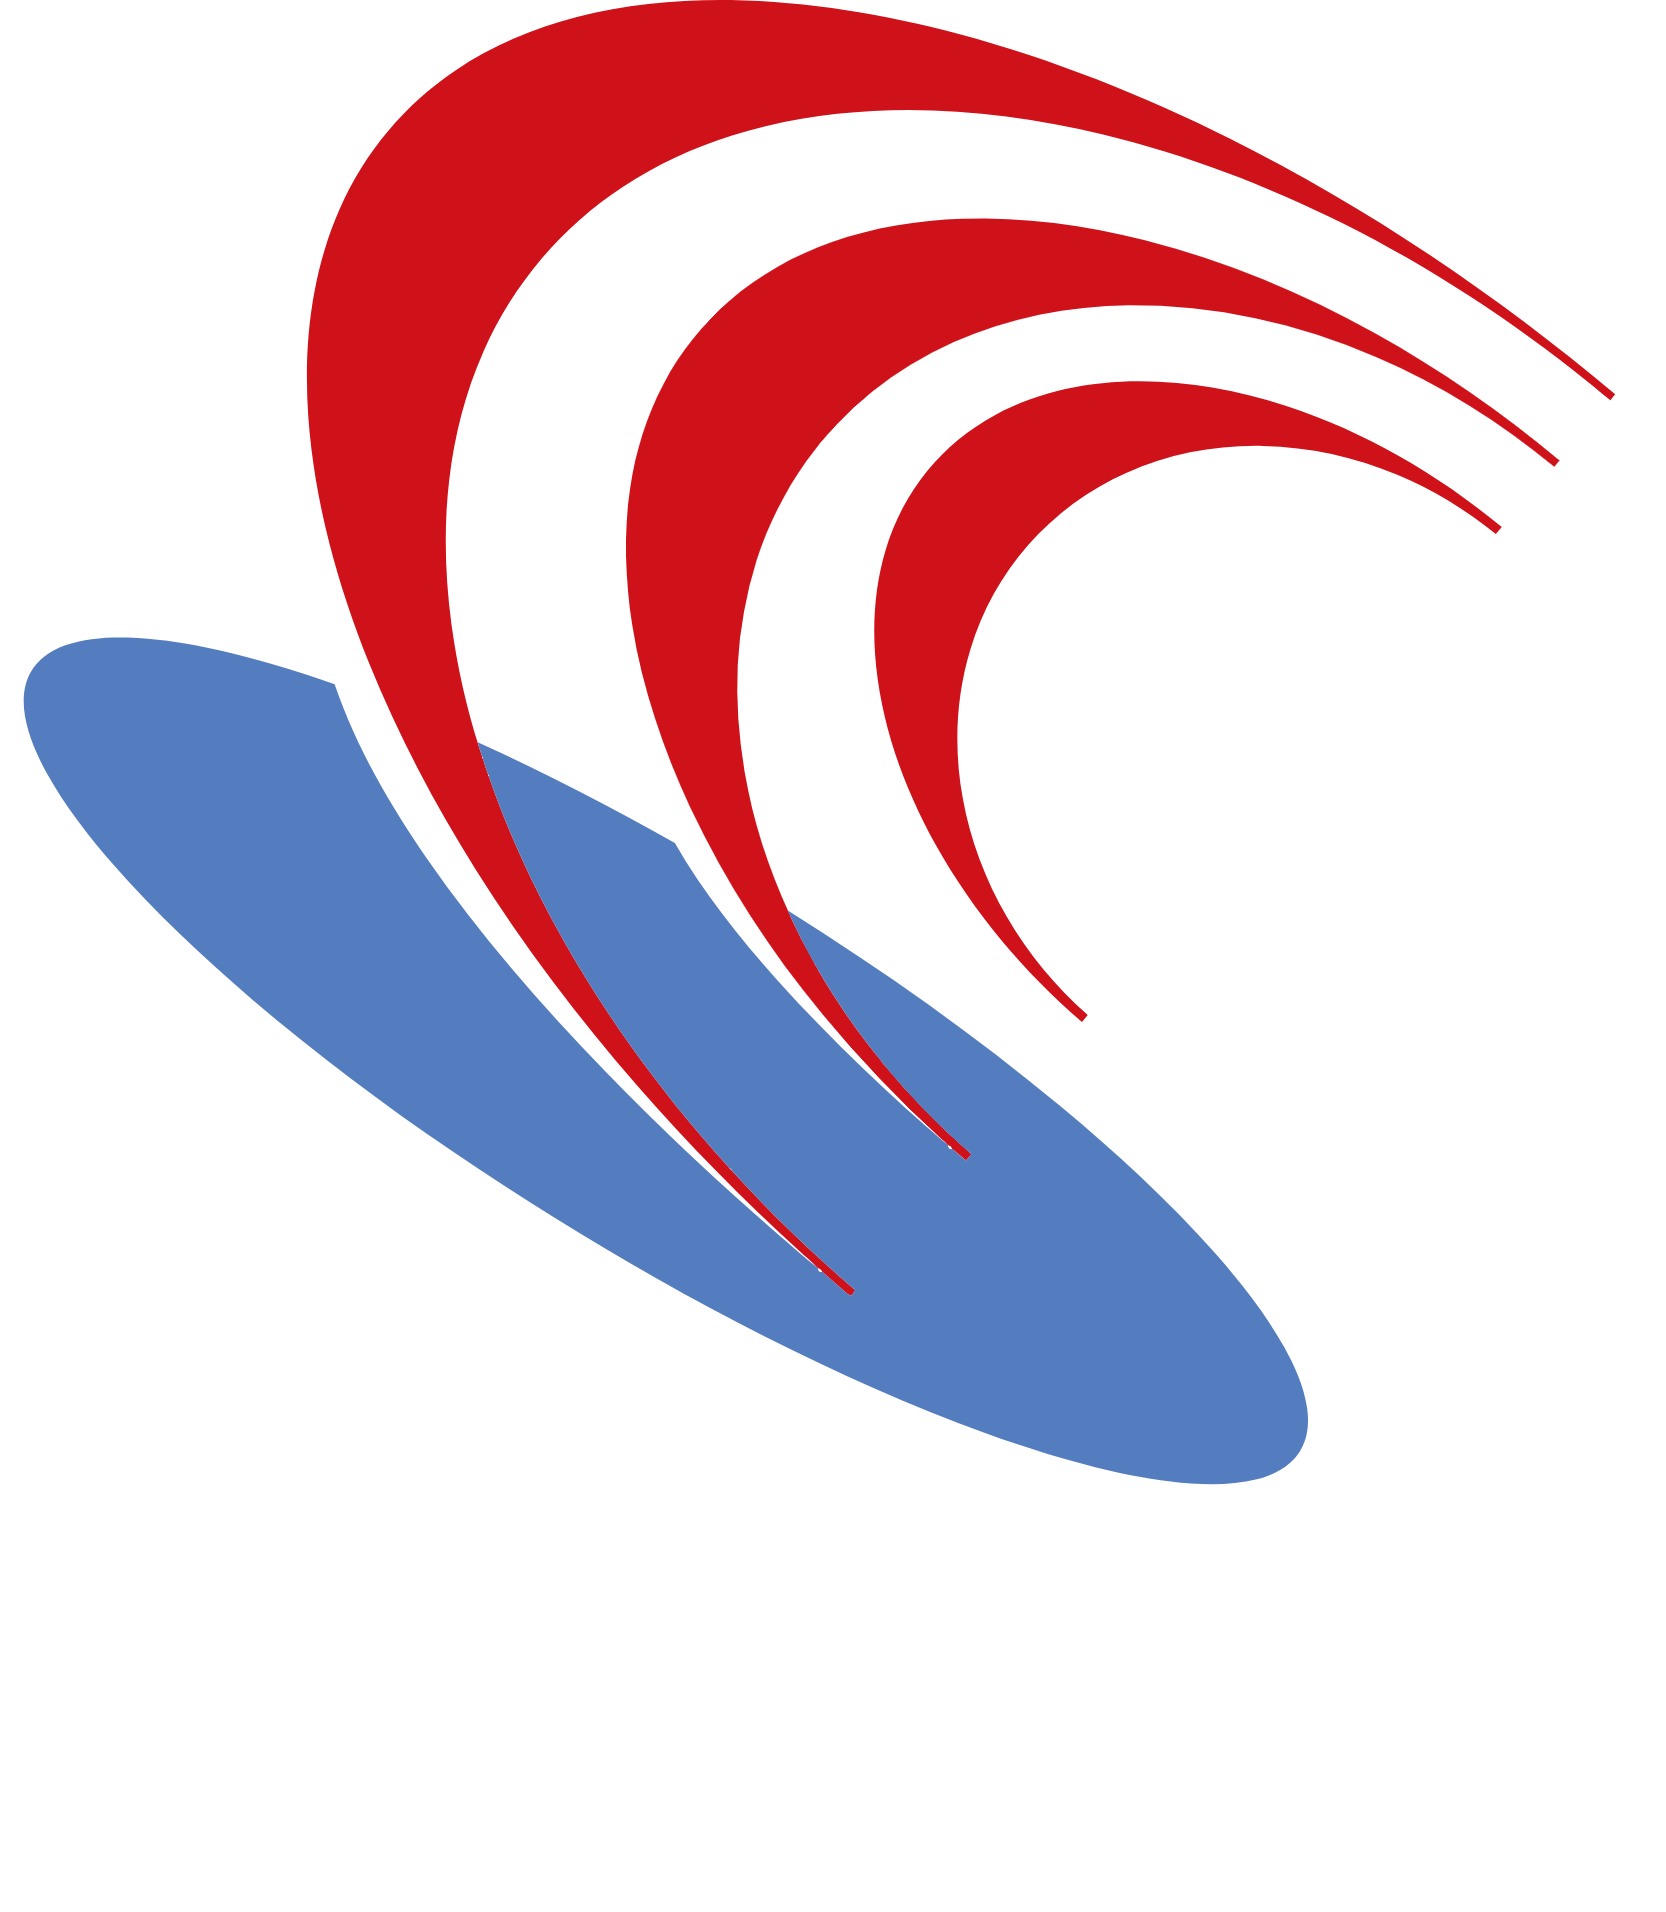 Novatek Microelectronics logo in transparent PNG and vectorized SVG formats